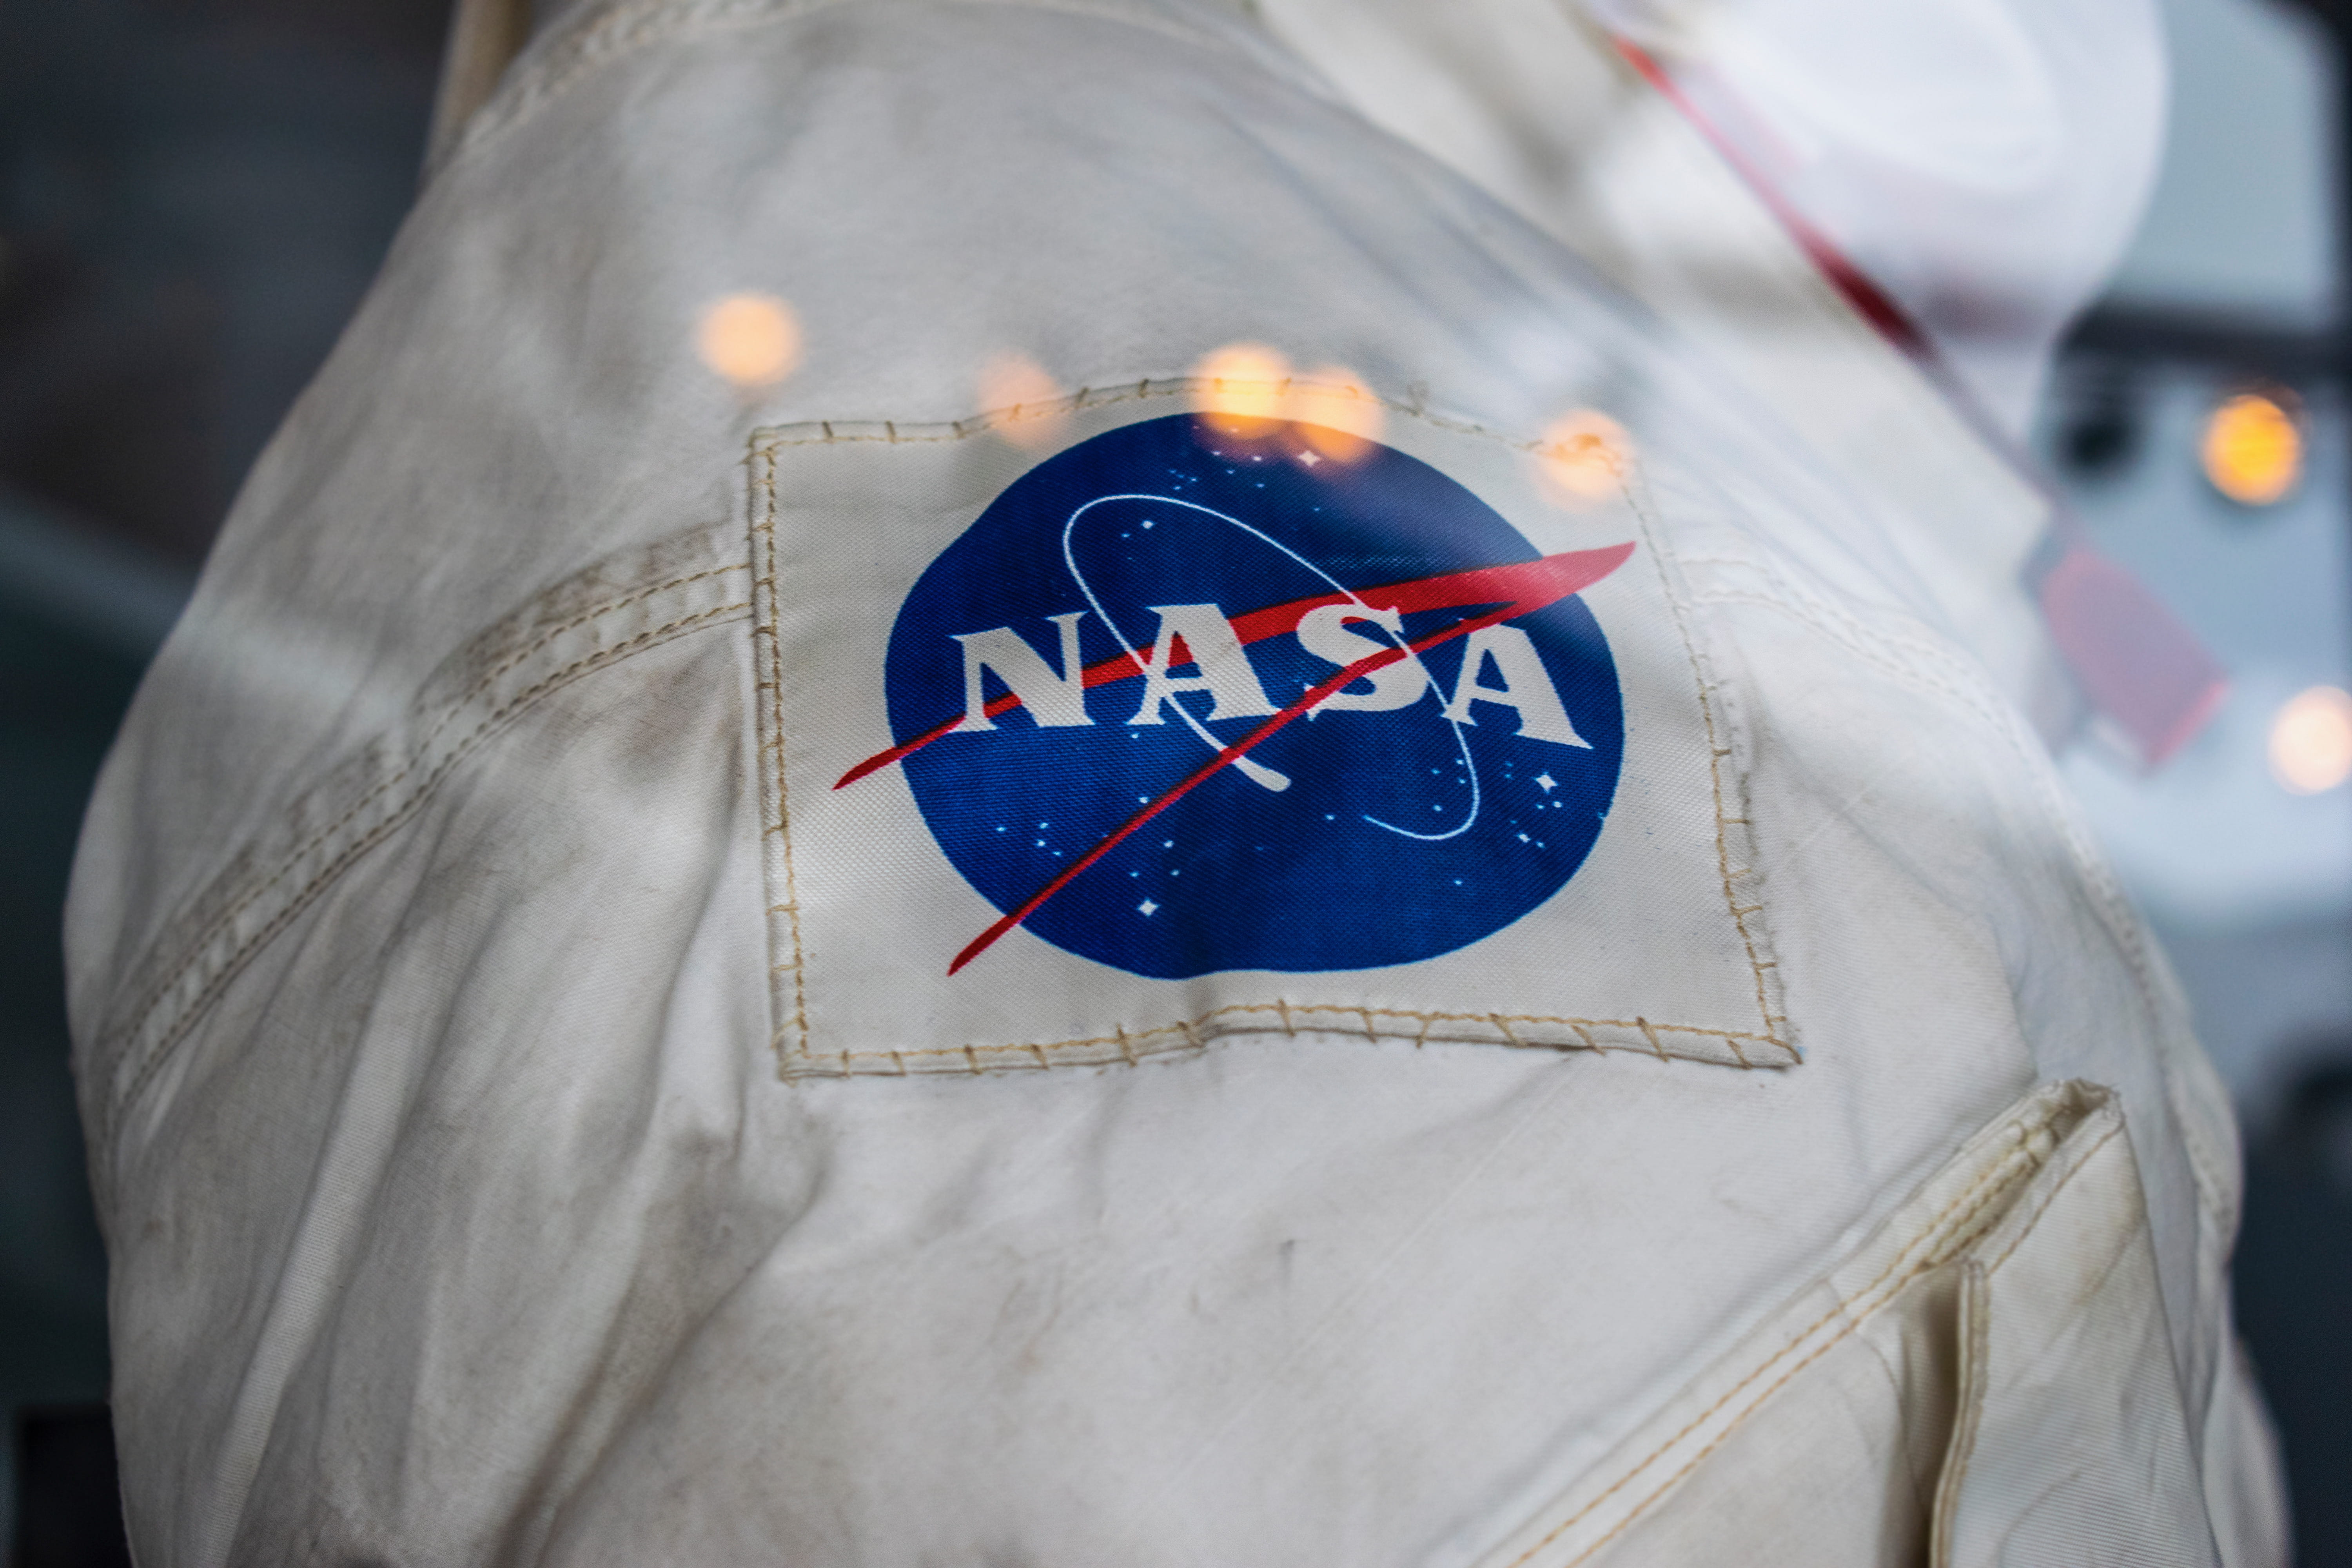 NASA uniform, apparel, clothing, usa, los angeles, symbol, logo